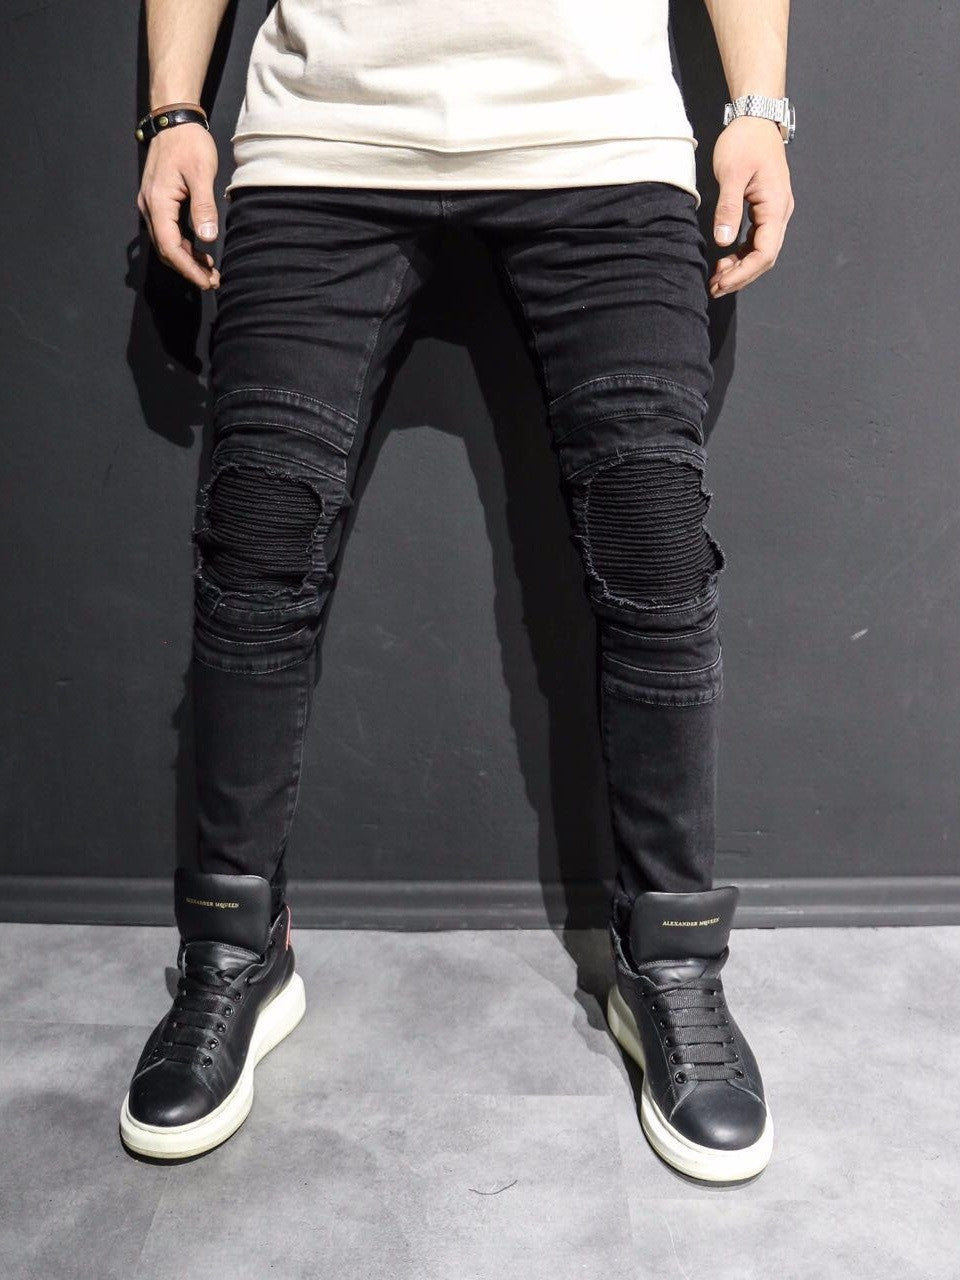 knee cut jeans mens